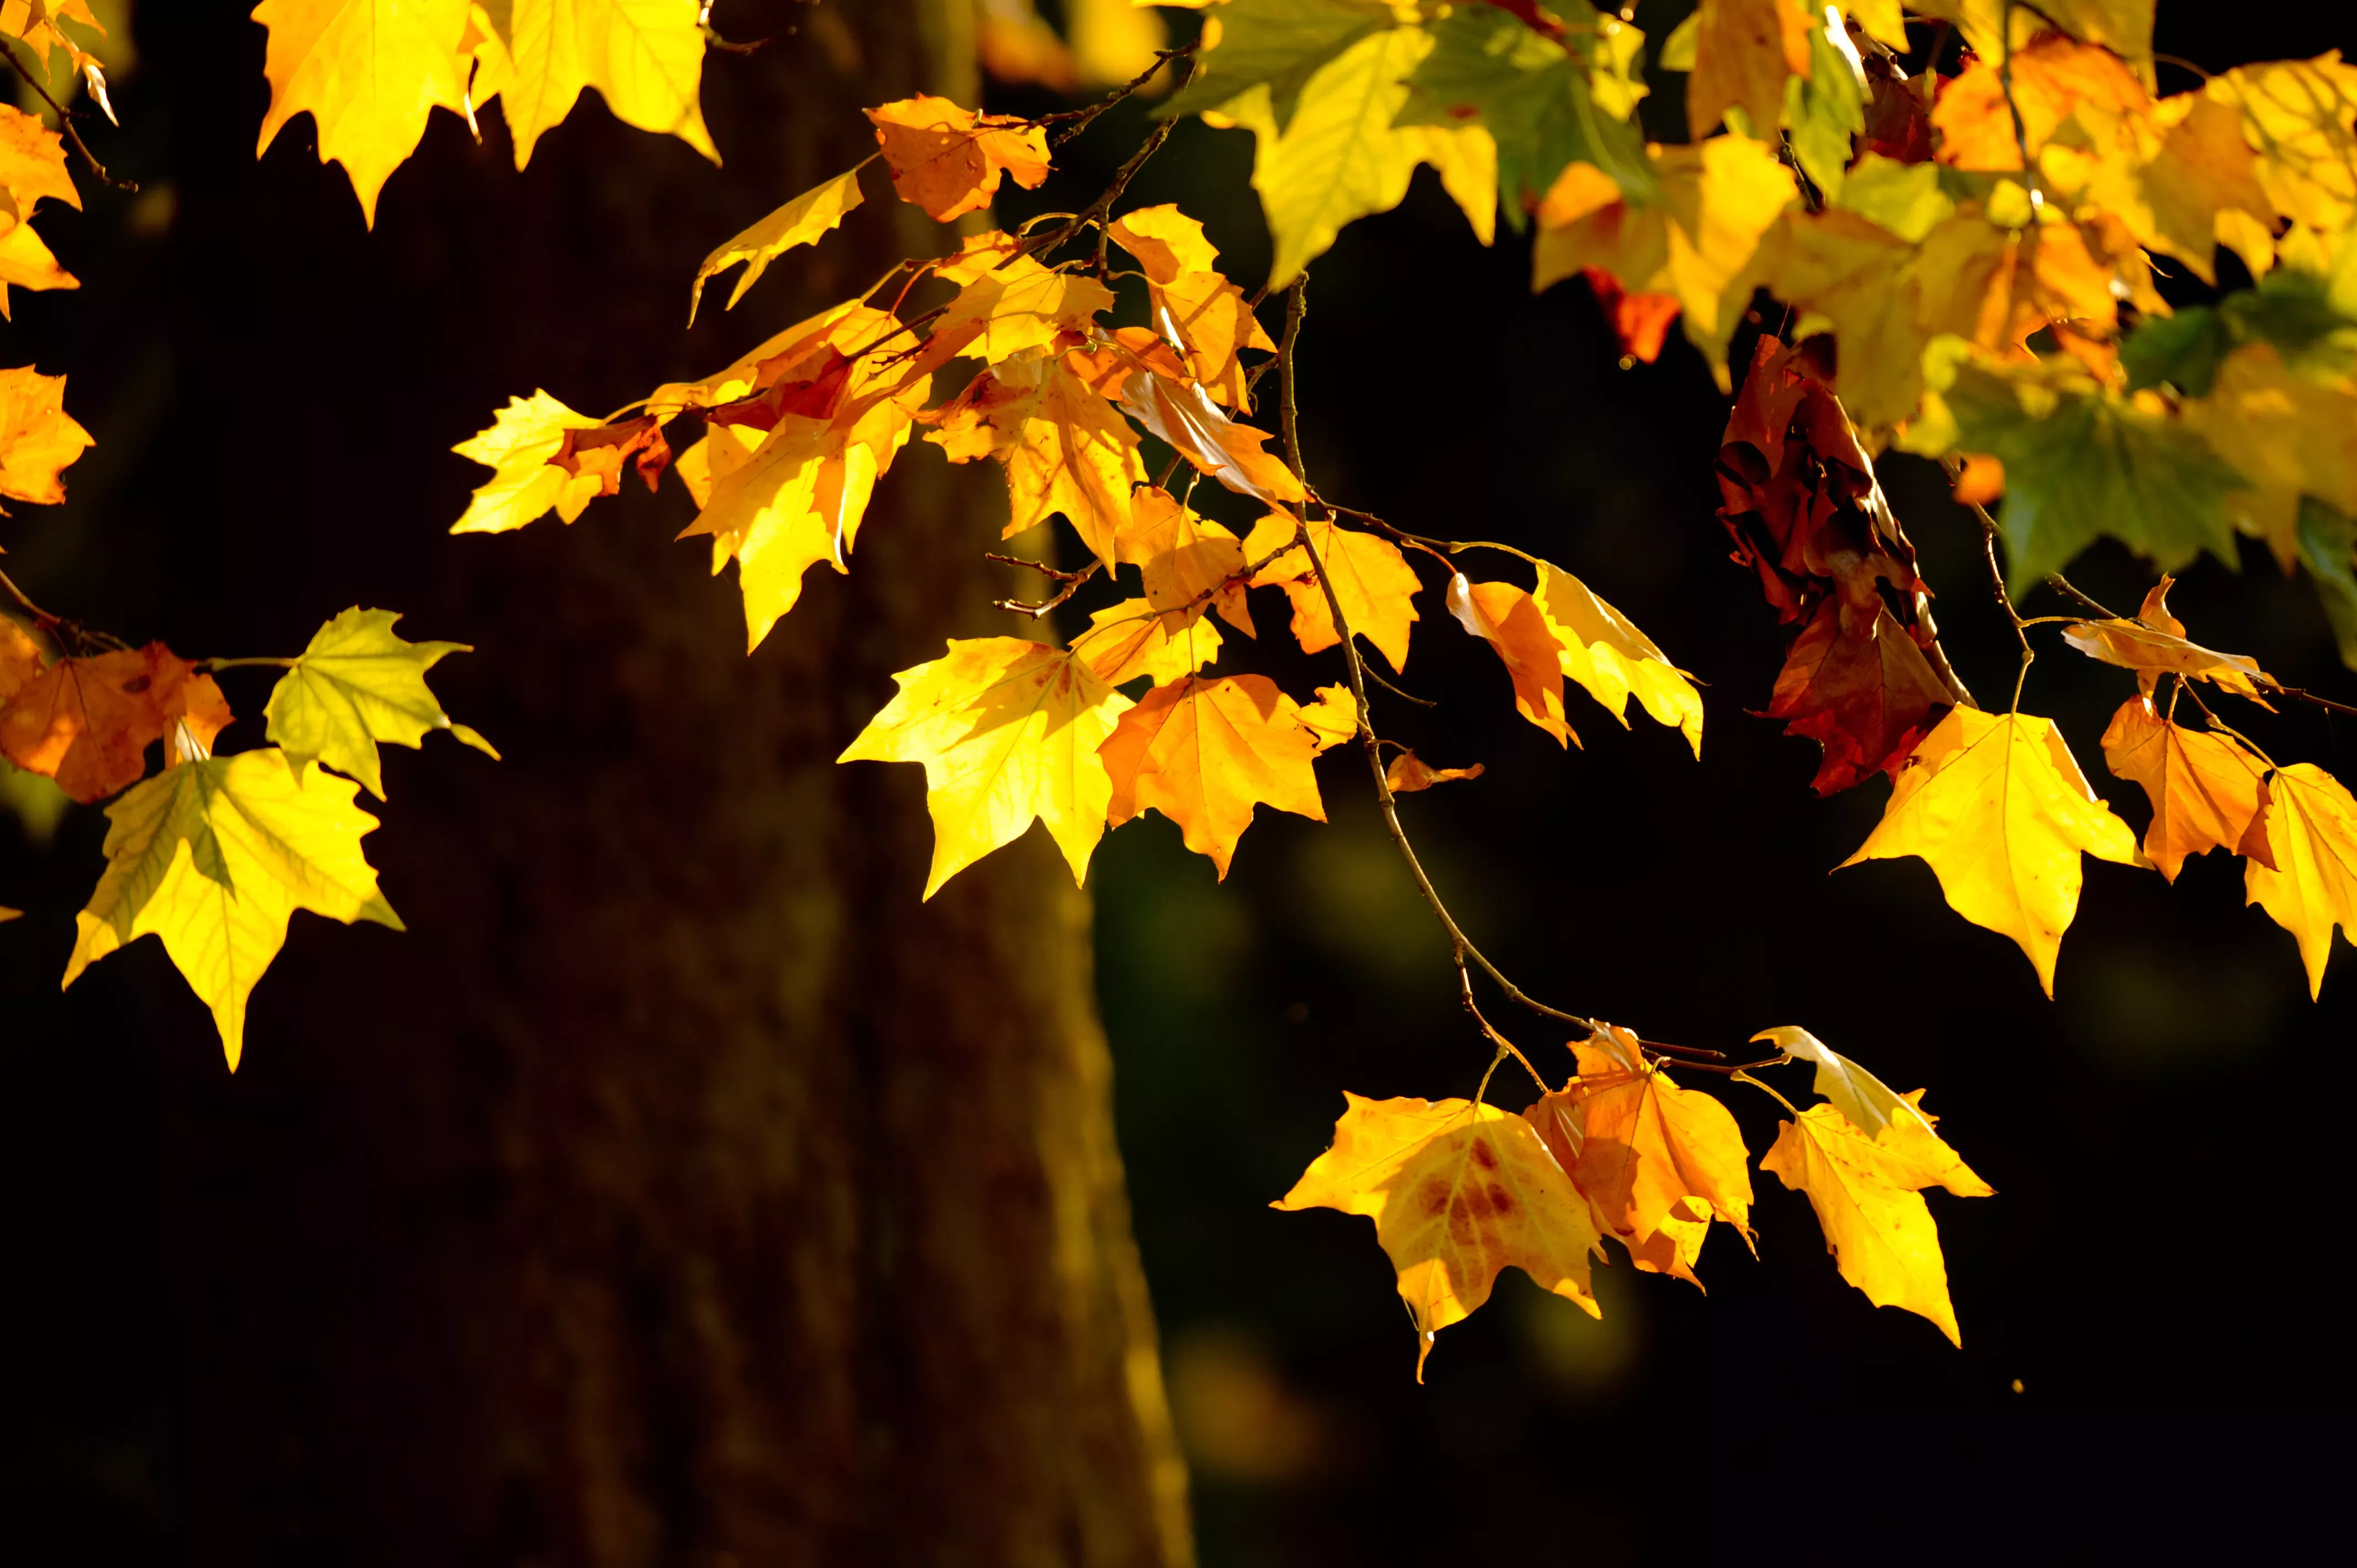 Golden autumnal leaves